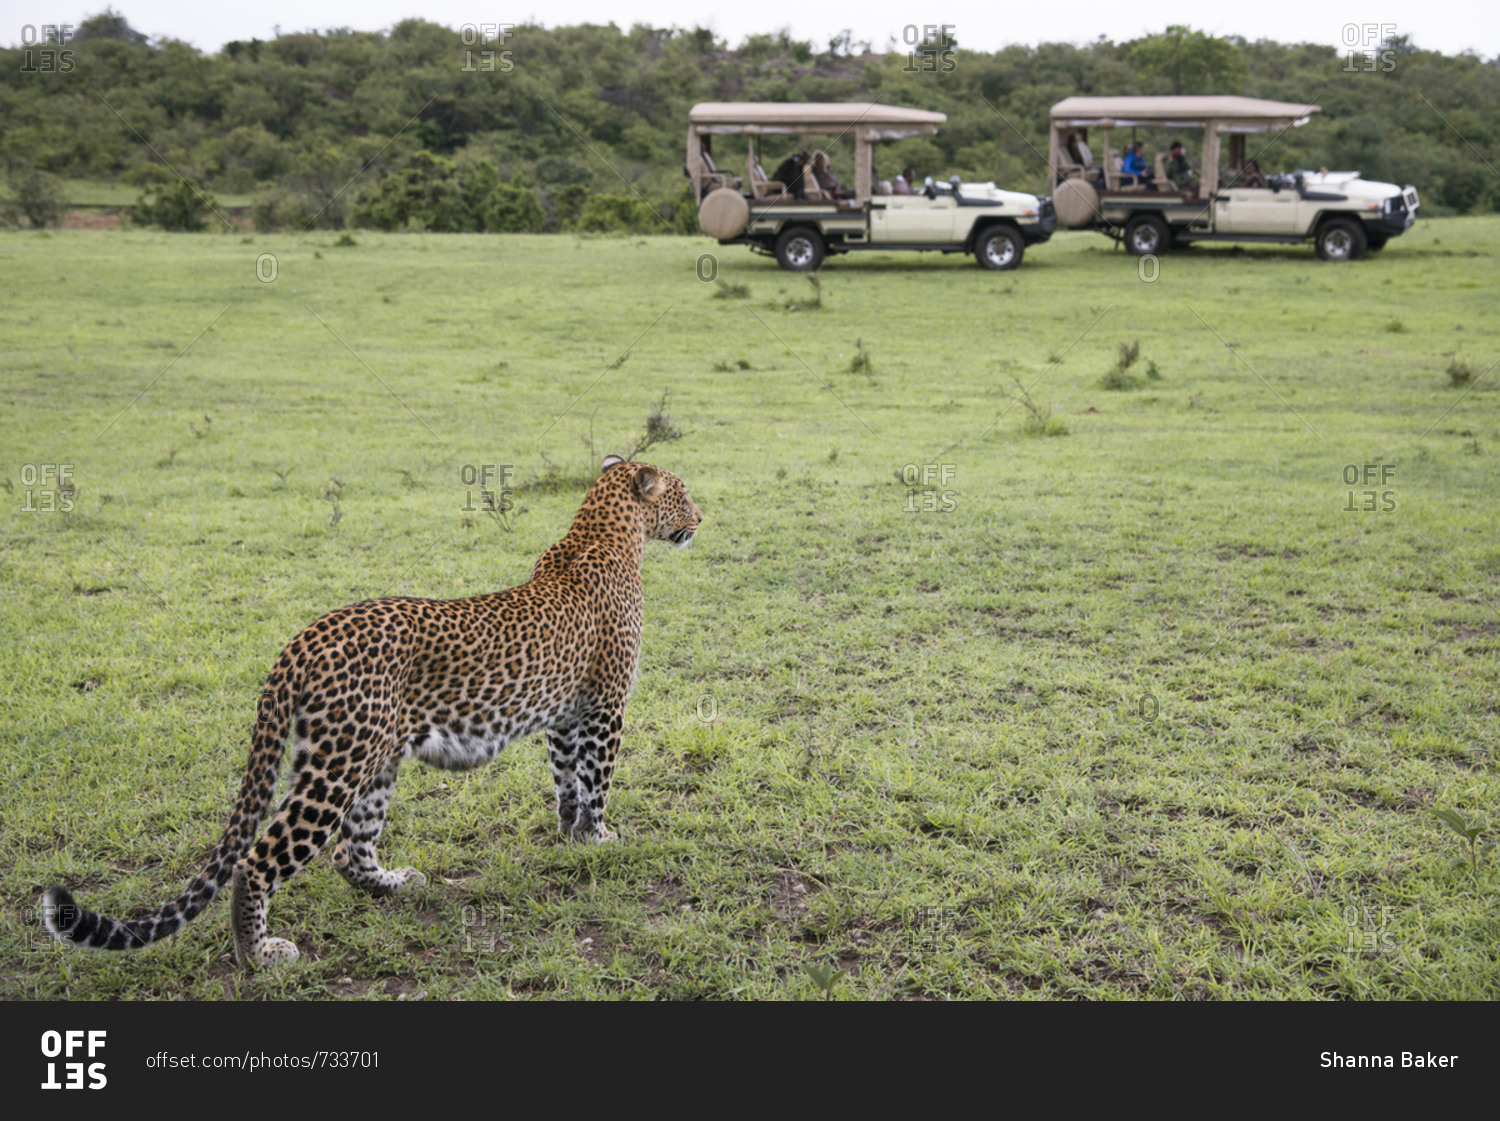 Leopard with two safari vehicles in the distance at Maasai Mara, Kenya